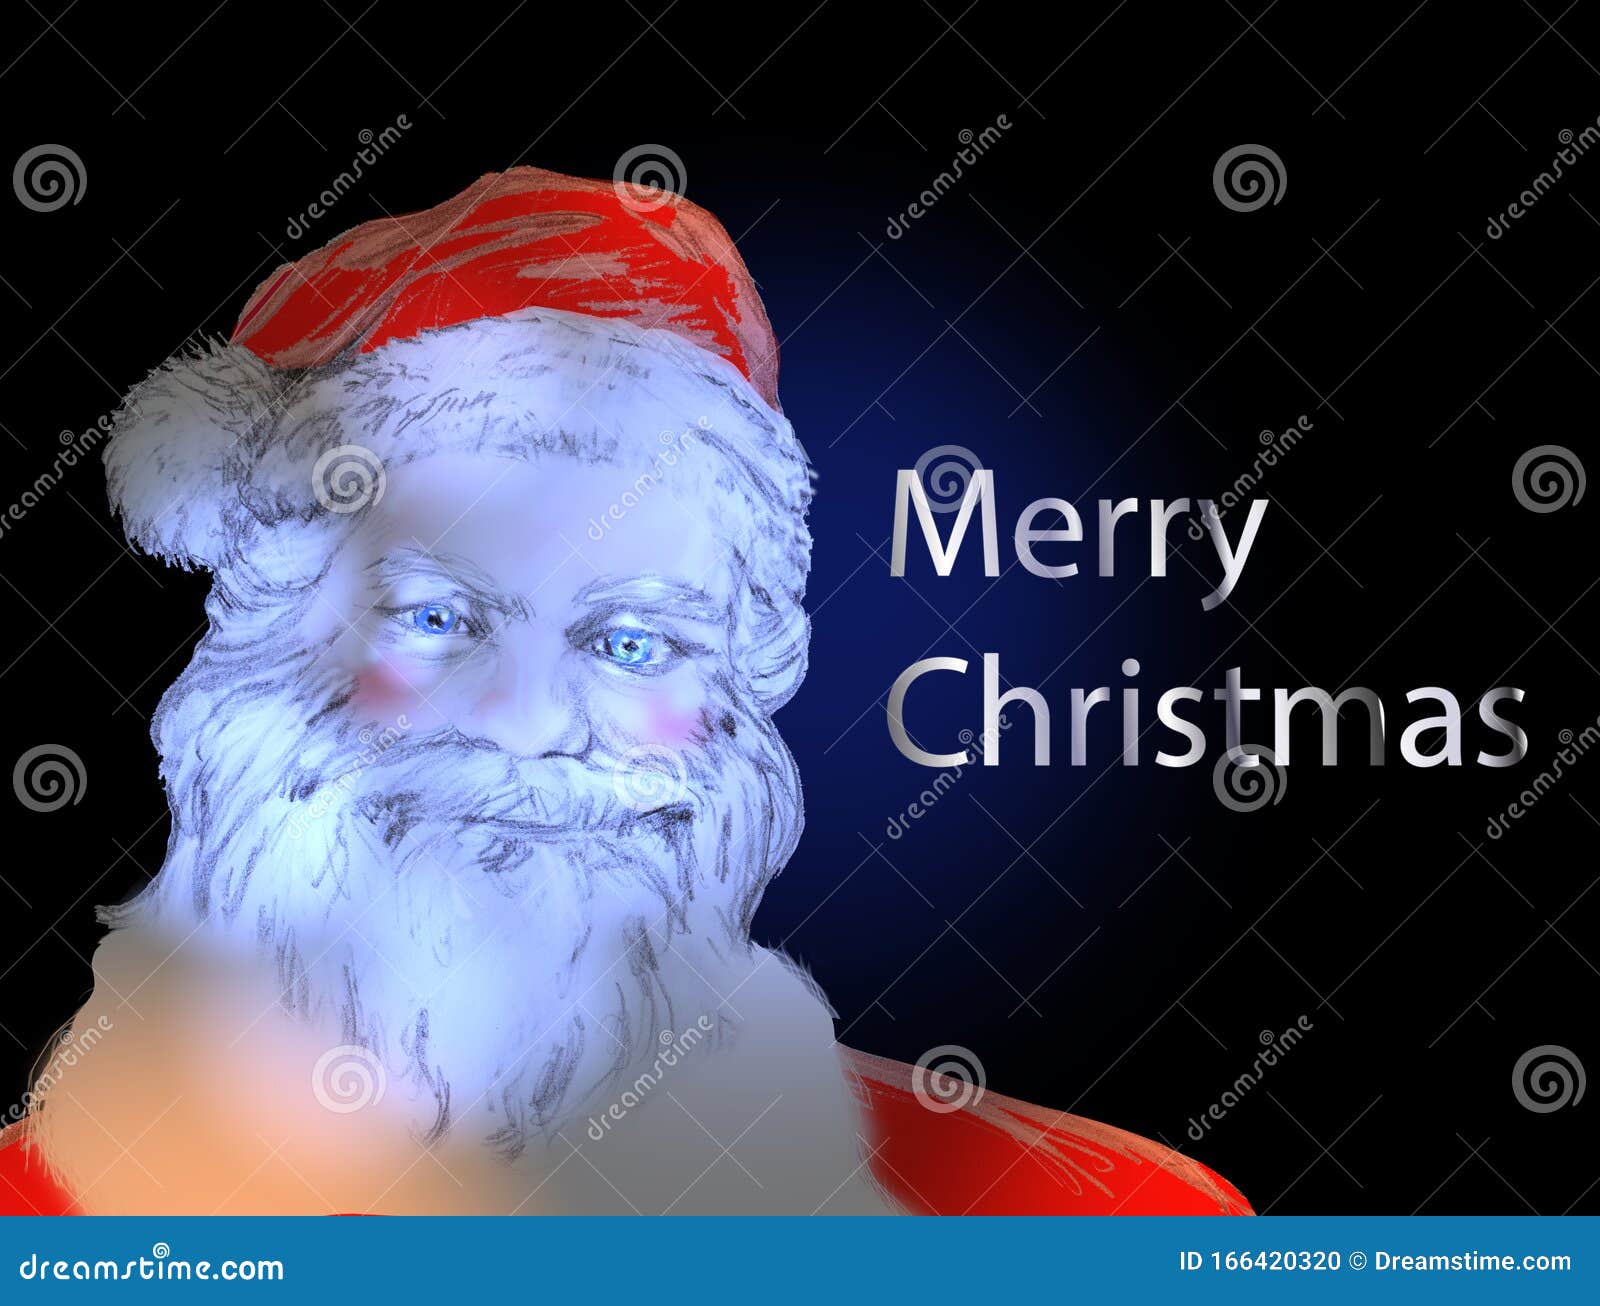 Smile Natale.Merry Christmas Santa Claus Papai Noel Babbo Natale Father Christmas Saint Nicholas Saint Nick Kris Kringle Santa Stock Photo Image Of Deep Father 166420320